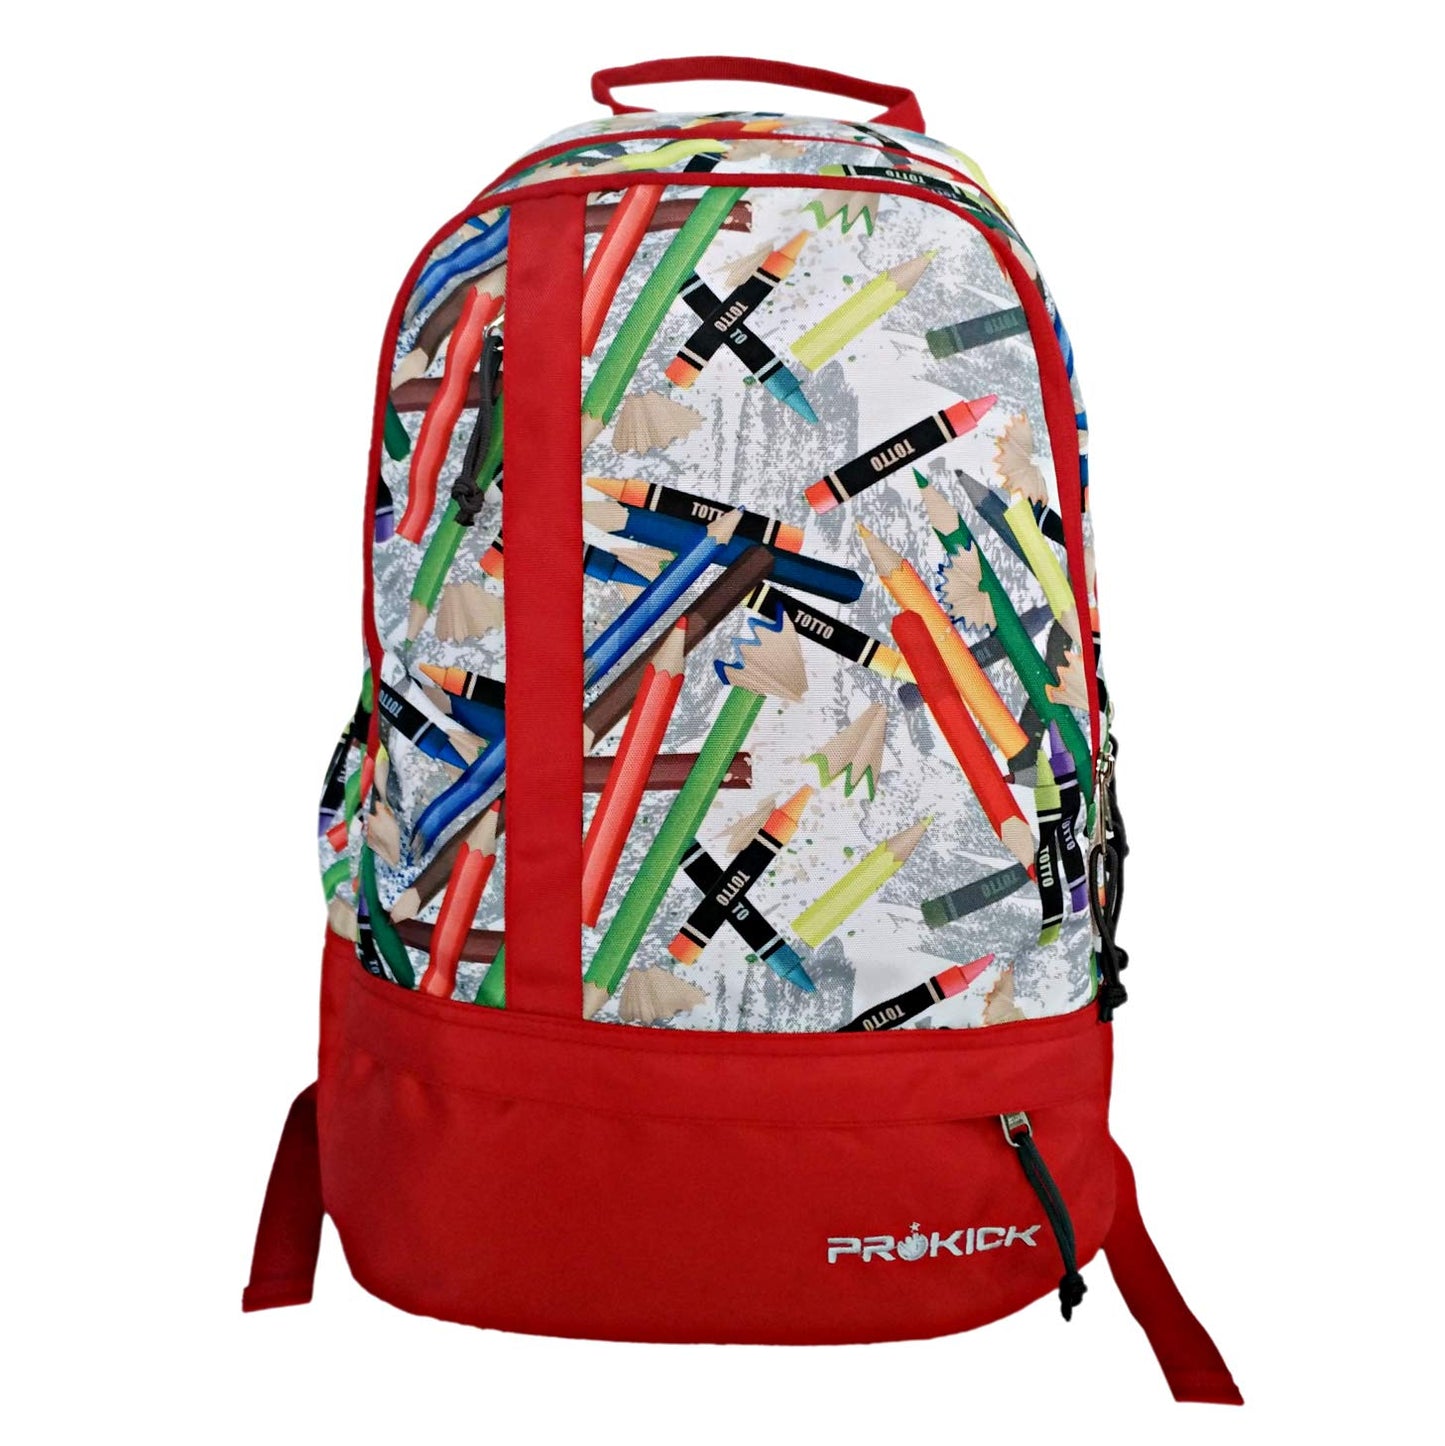 Prokick Elements 26 Ltrs Casual Laptop Backpack - Crayon - Best Price online Prokicksports.com